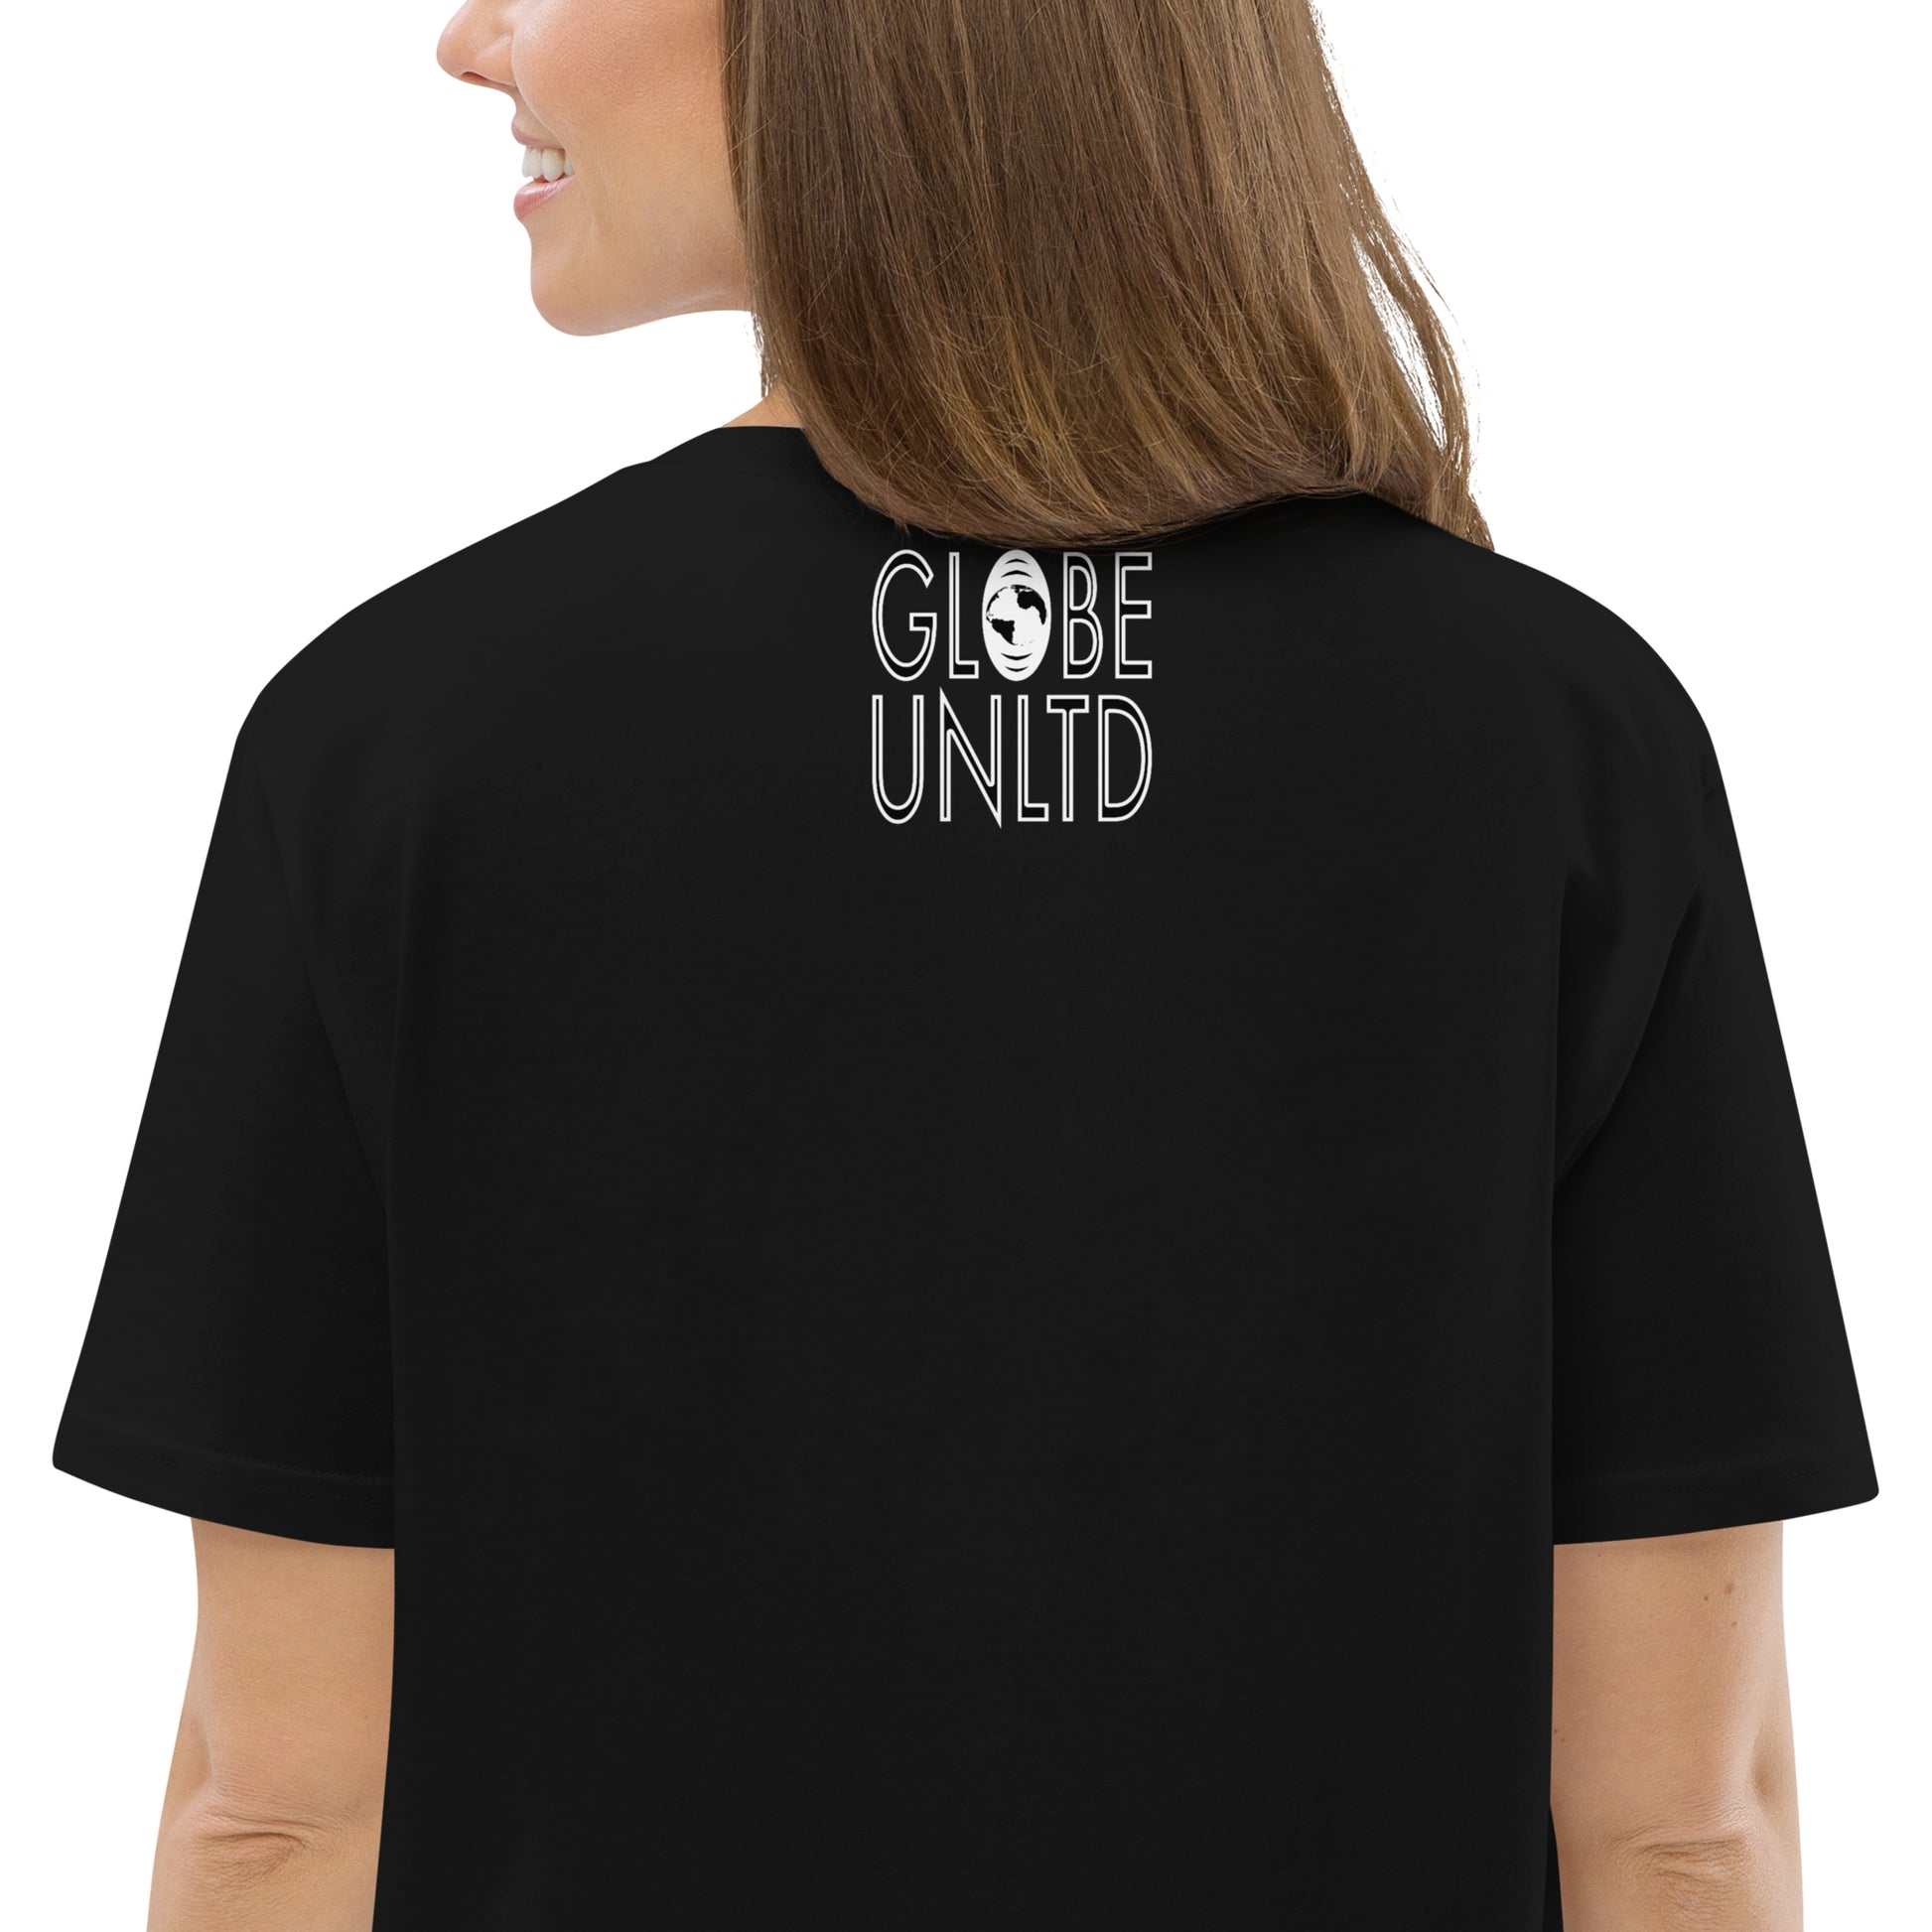 Globe UNLTD London LON Graffiti 100% Organic Cotton T-Shirt in Black. Back Facing on Model.